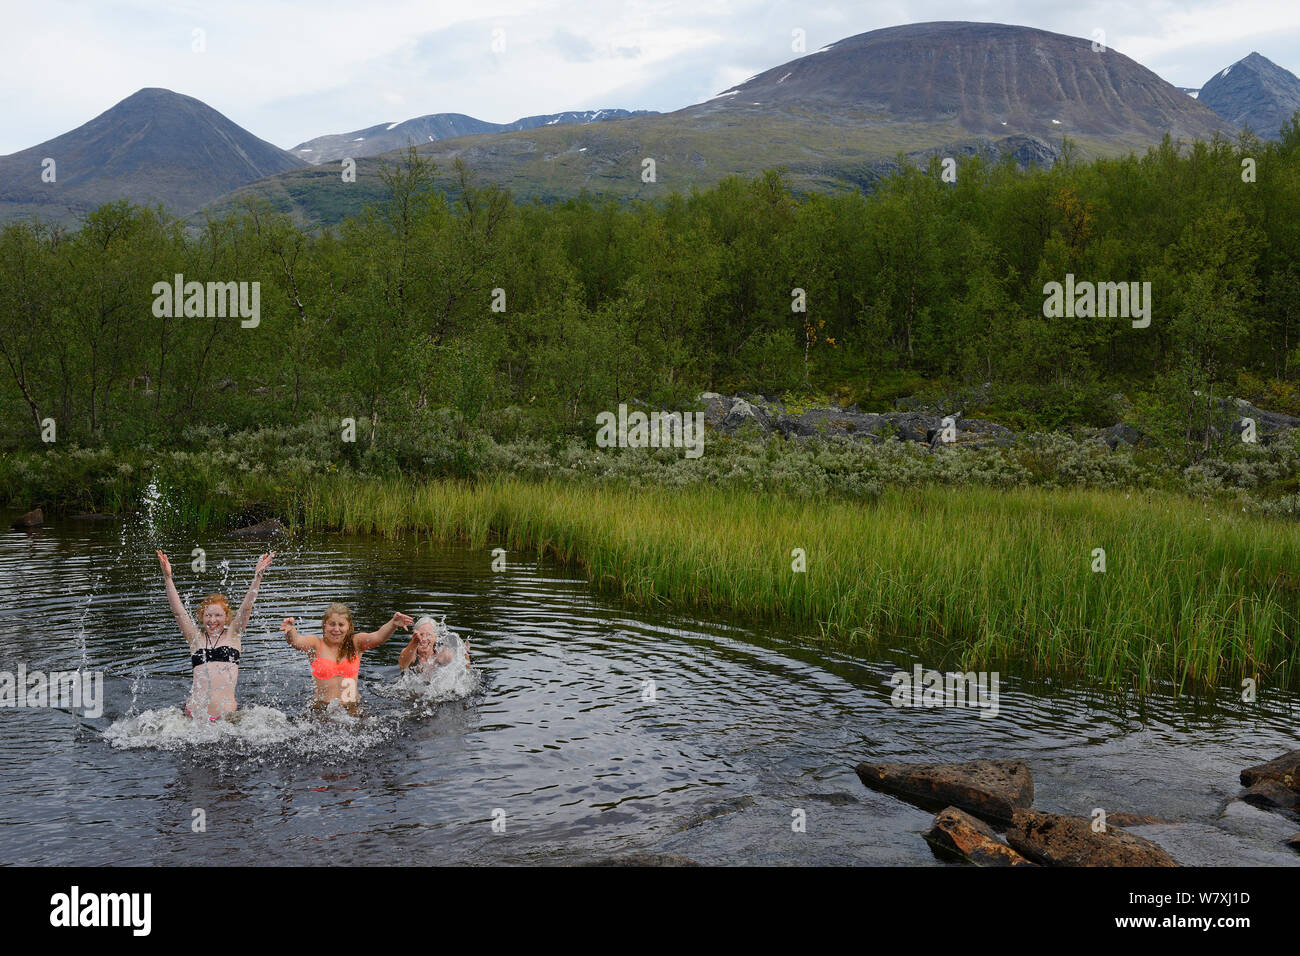 Woman and two teenage girls splashing in river on hiking trip, Laponia Circuit, along the Padjelantaleden trail, Padjelanta National Park and Sarek National Park, Norrbotten, Lapland, Sweden. Model released Stock Photo